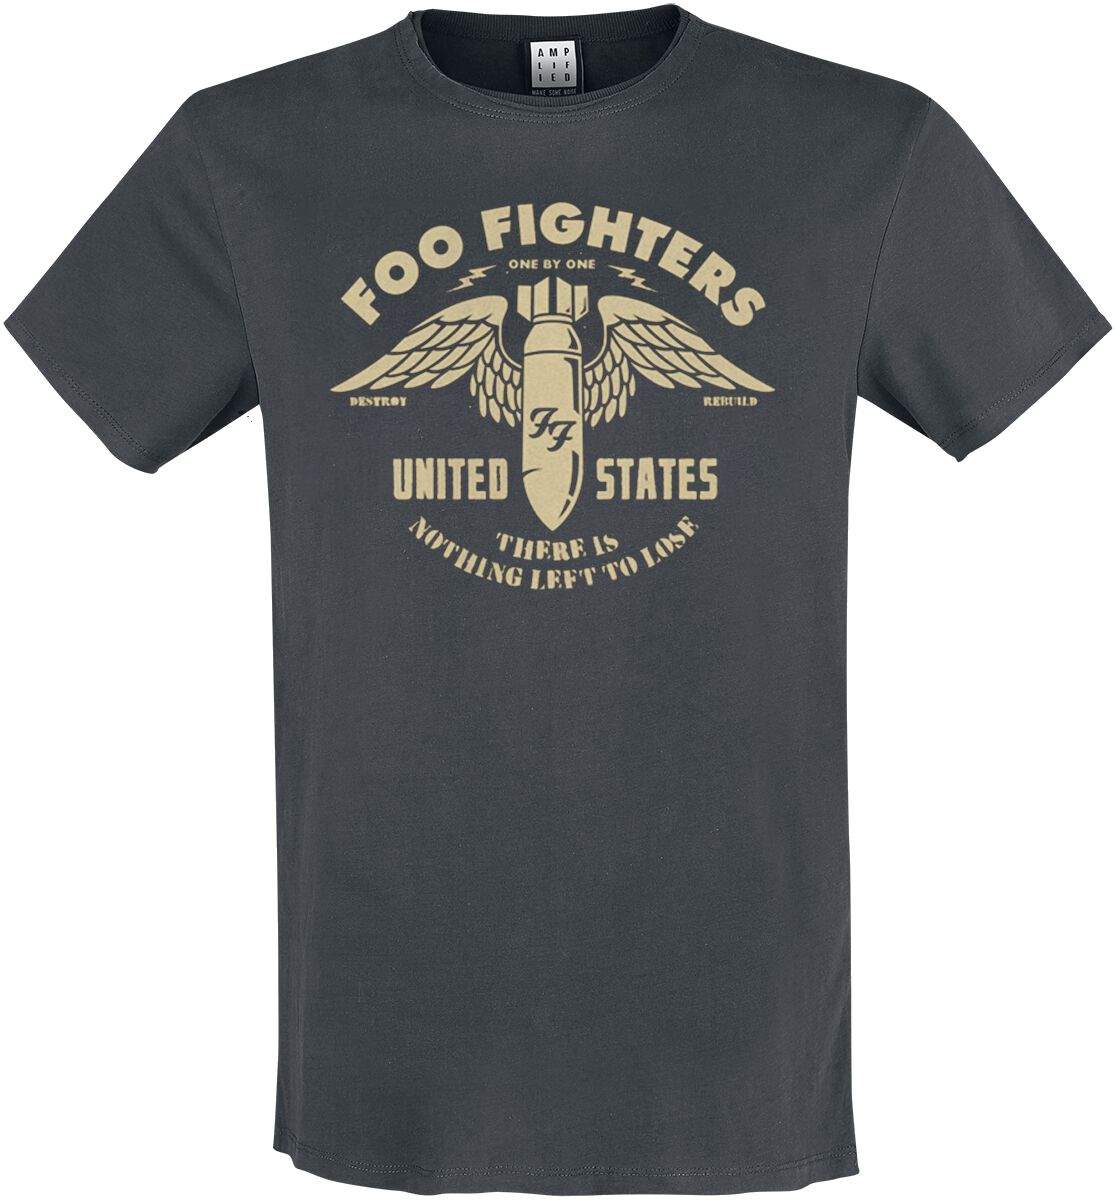 Foo Fighters T-Shirt - Amplified Collection - One By One - S bis 3XL - für Männer - Größe L - charcoal  - Lizenziertes Merchandise!